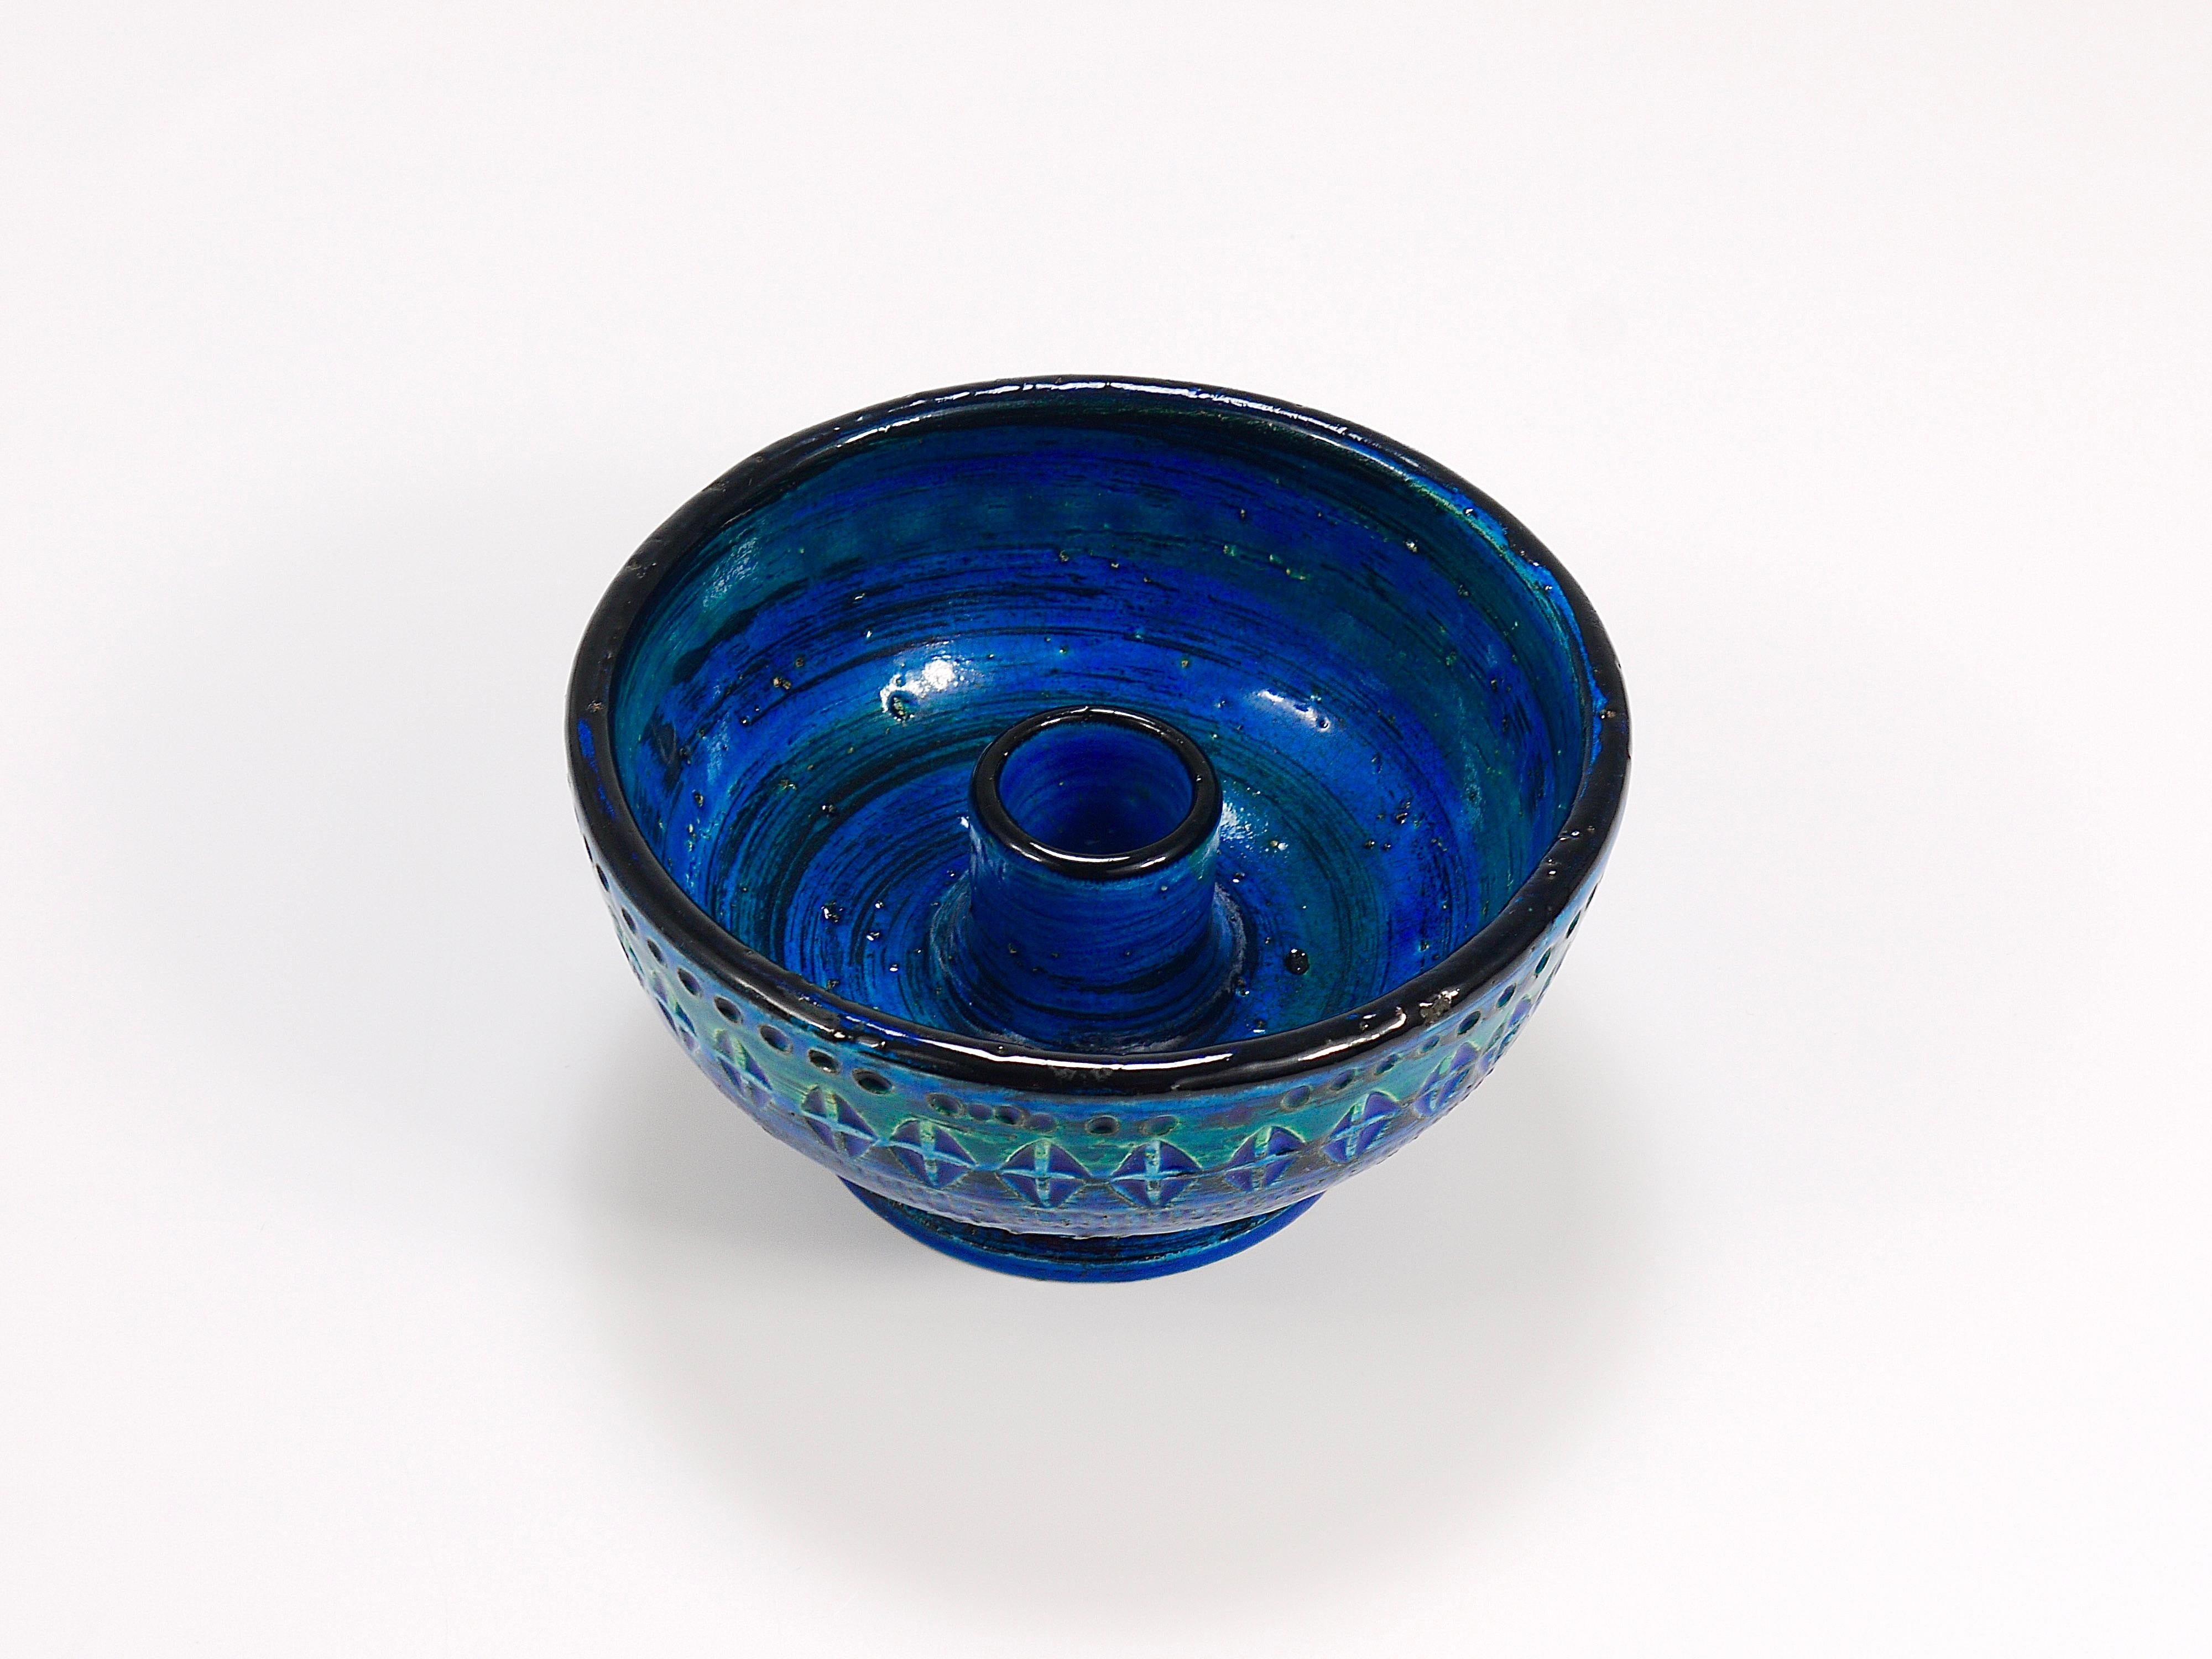 Aldo Londi Bitossi Rimini Blue Glazed Midcentury Candle Holder Bowl, 1950s For Sale 4